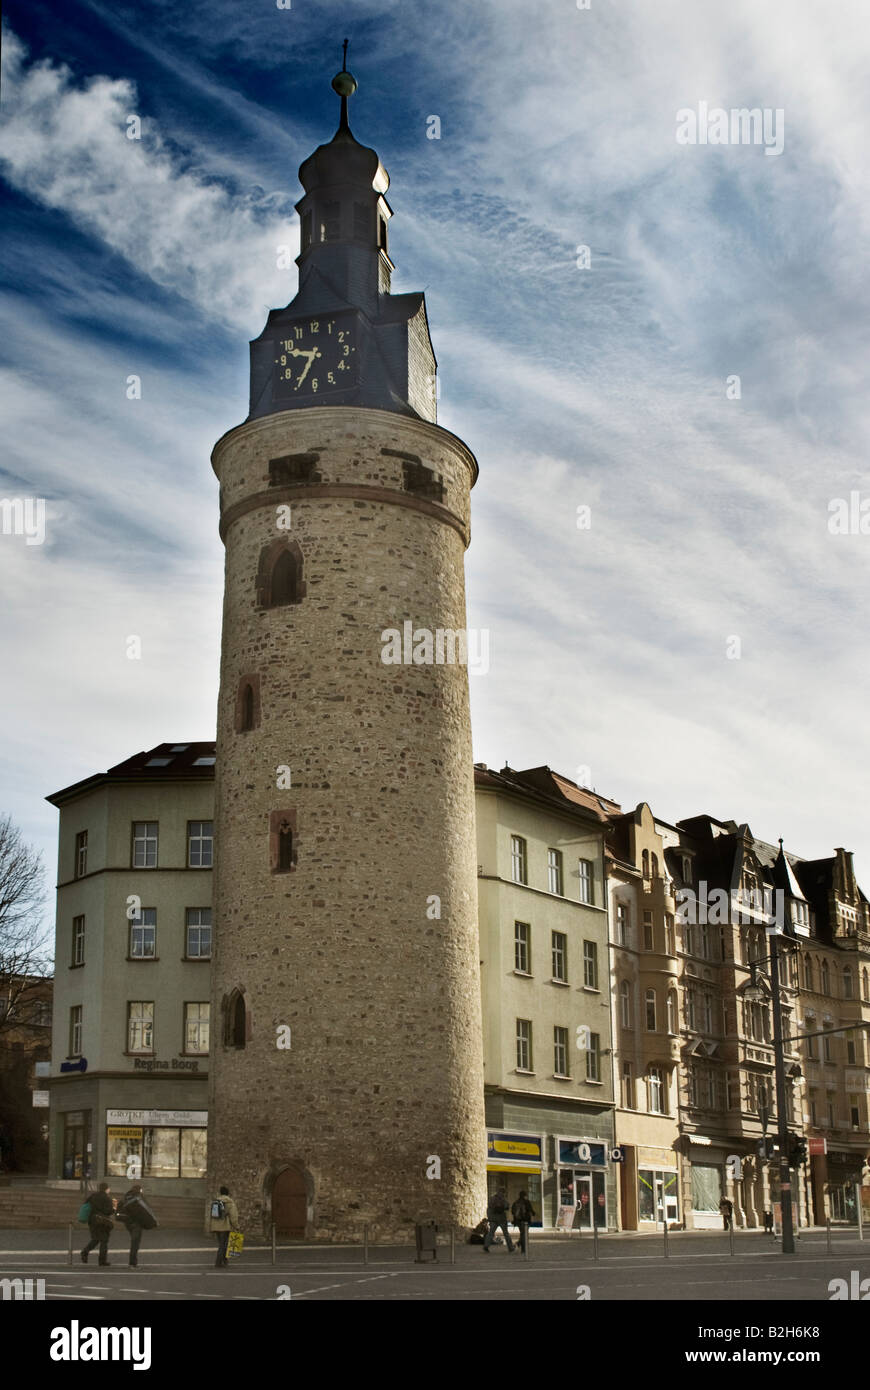 Leipziger Tower, Halle, Sachsen-Anhalt, Germany (Feb 2008) Stock Photo